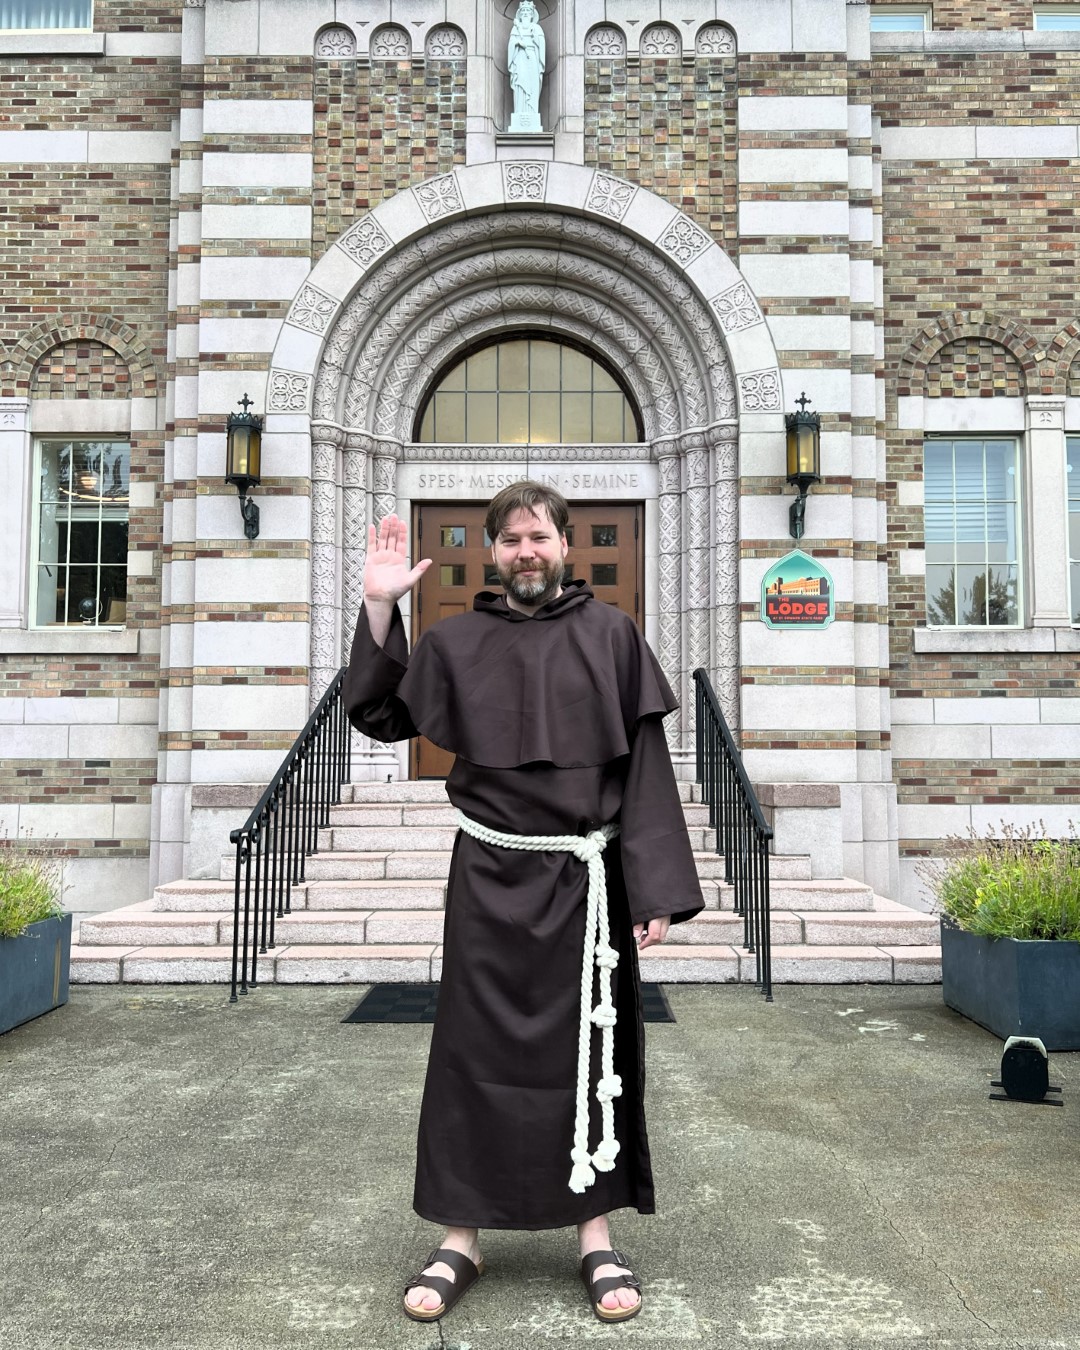 Brice in a Franciscan habit outside Saint Edward's Seminary